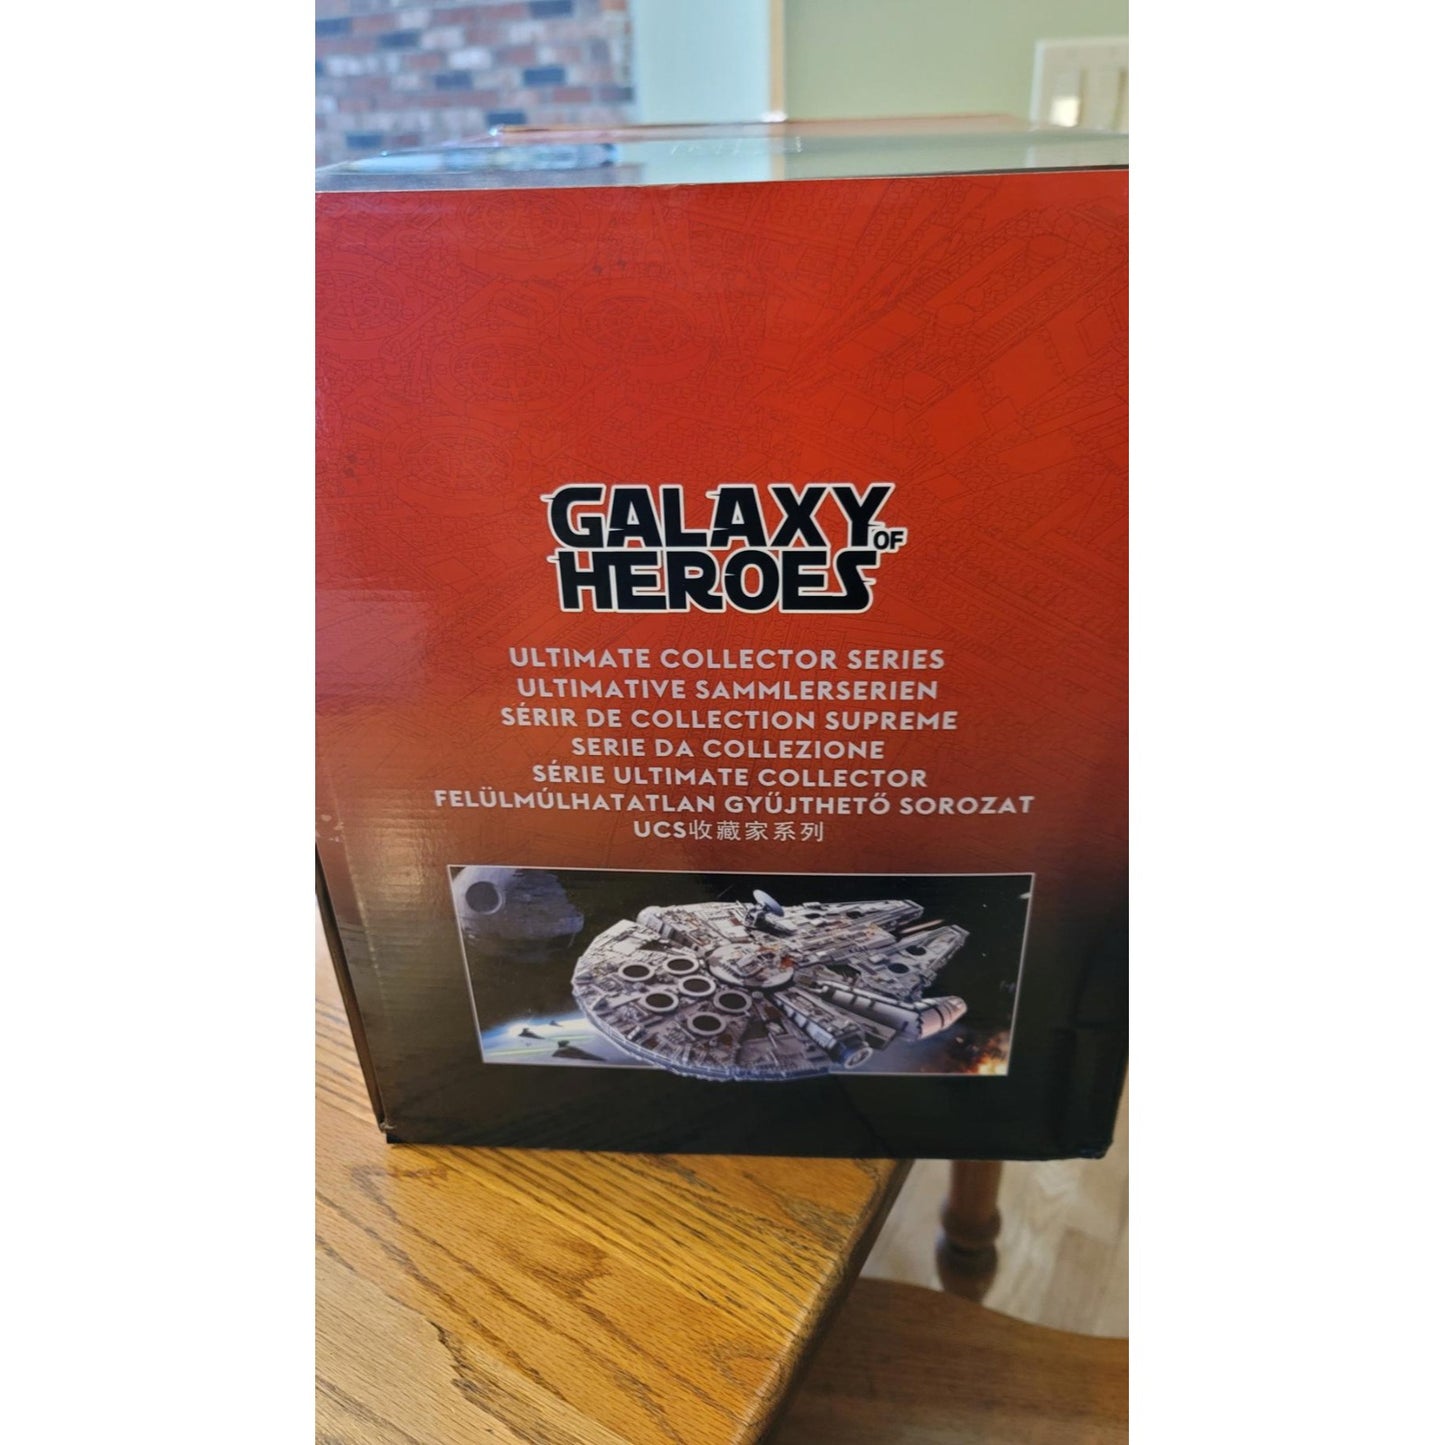 Millennium Falcon - Galaxy of Heroes block Compatible Star Wars New 8445 PCS